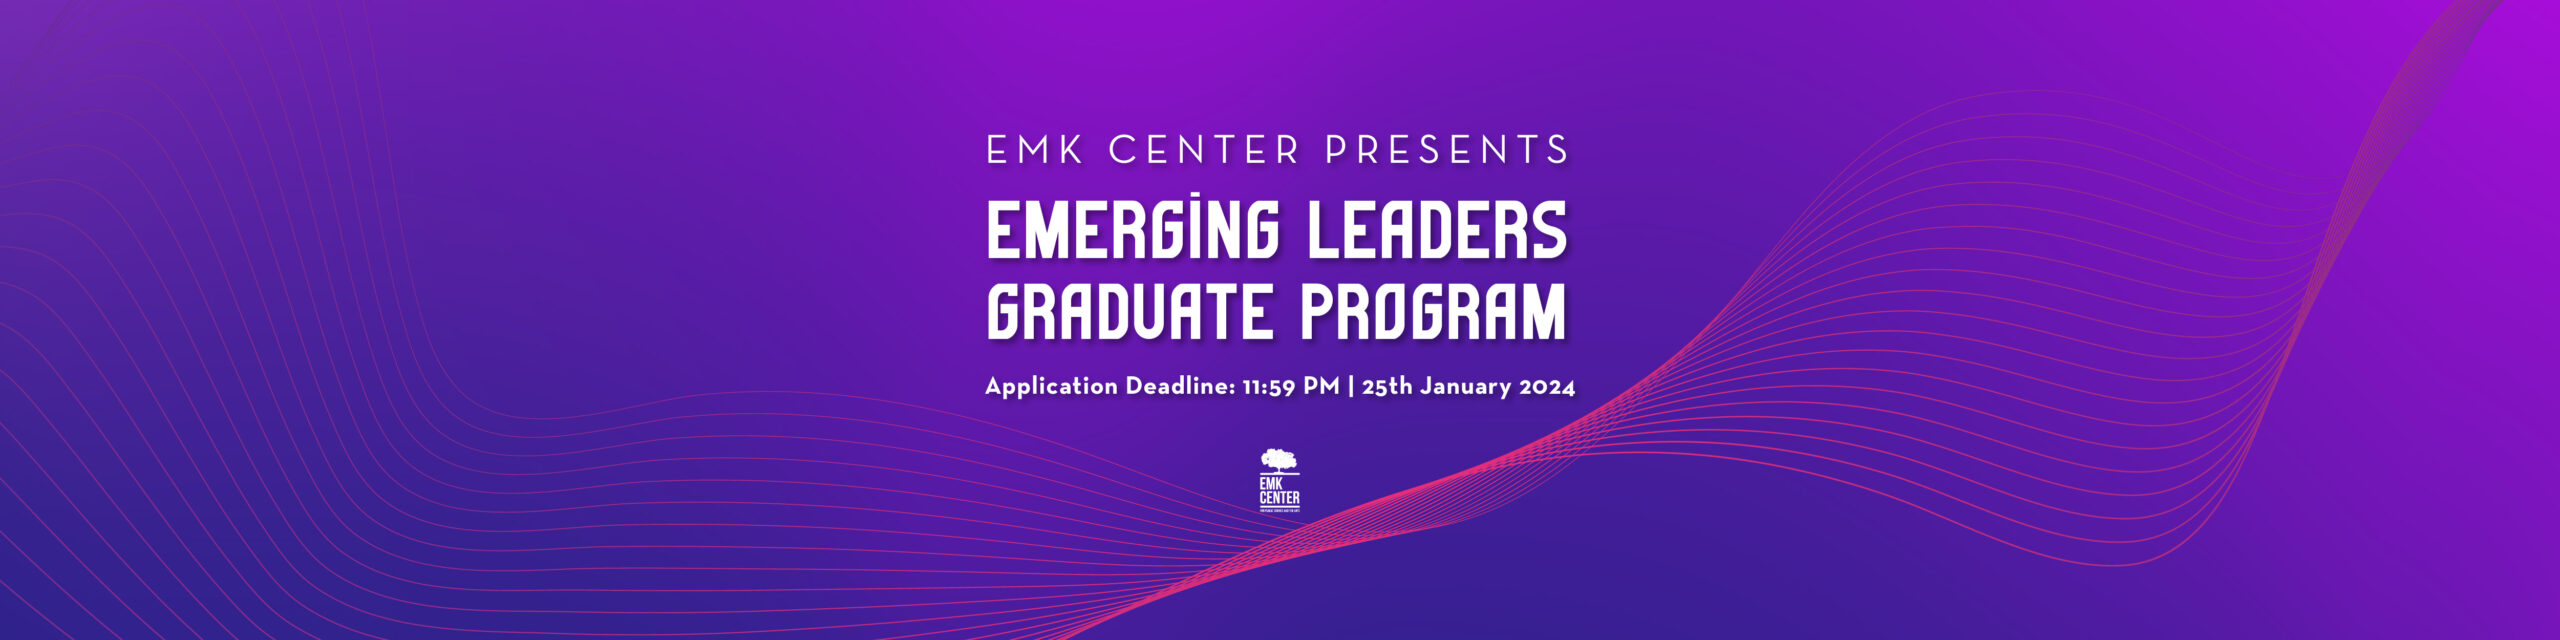 EMERGING LEADERS GRADUATE PROGRAM 2024 Edward M. Kennedy Center